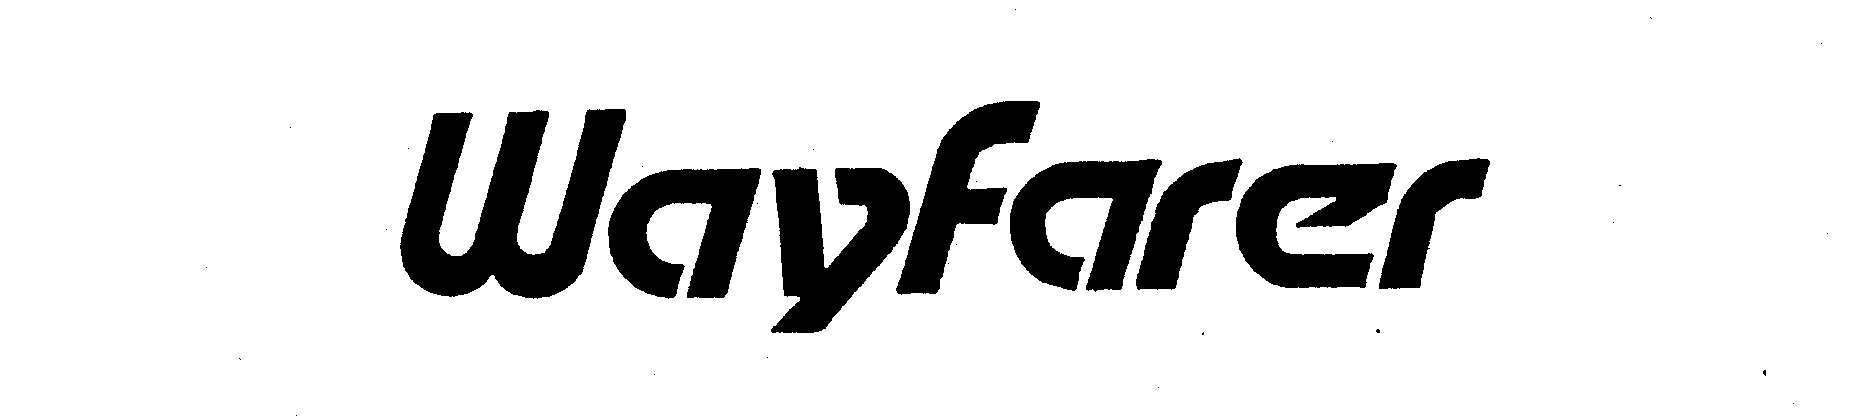 Trademark Logo WAYFARER